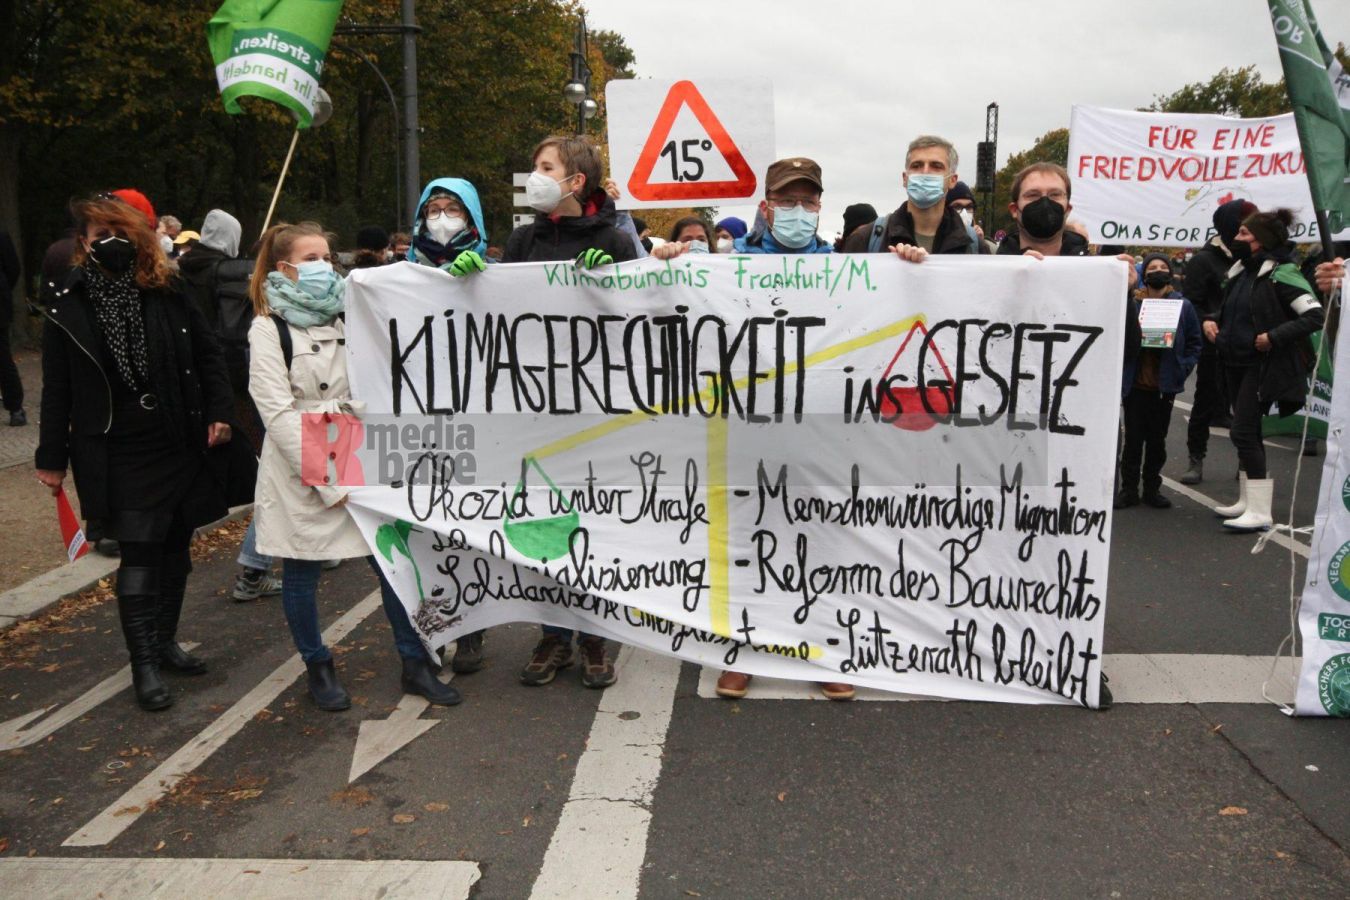 Klimaprotest in Berlin nach der Bundestagswahl <i>Bild fotopaula/R-mediabase</i> <br><a href=/confor2/?bld=59879&pst=59856&aid=225&dc=1702&i1=fotopaula/R-mediabase>Anfrage Download Bild 59879</a>  <a href=/wp-admin/post.php?post=59879&action=edit> / Edit</a><br><a href=/?p=59856>Zum Beitrag 59856</a>